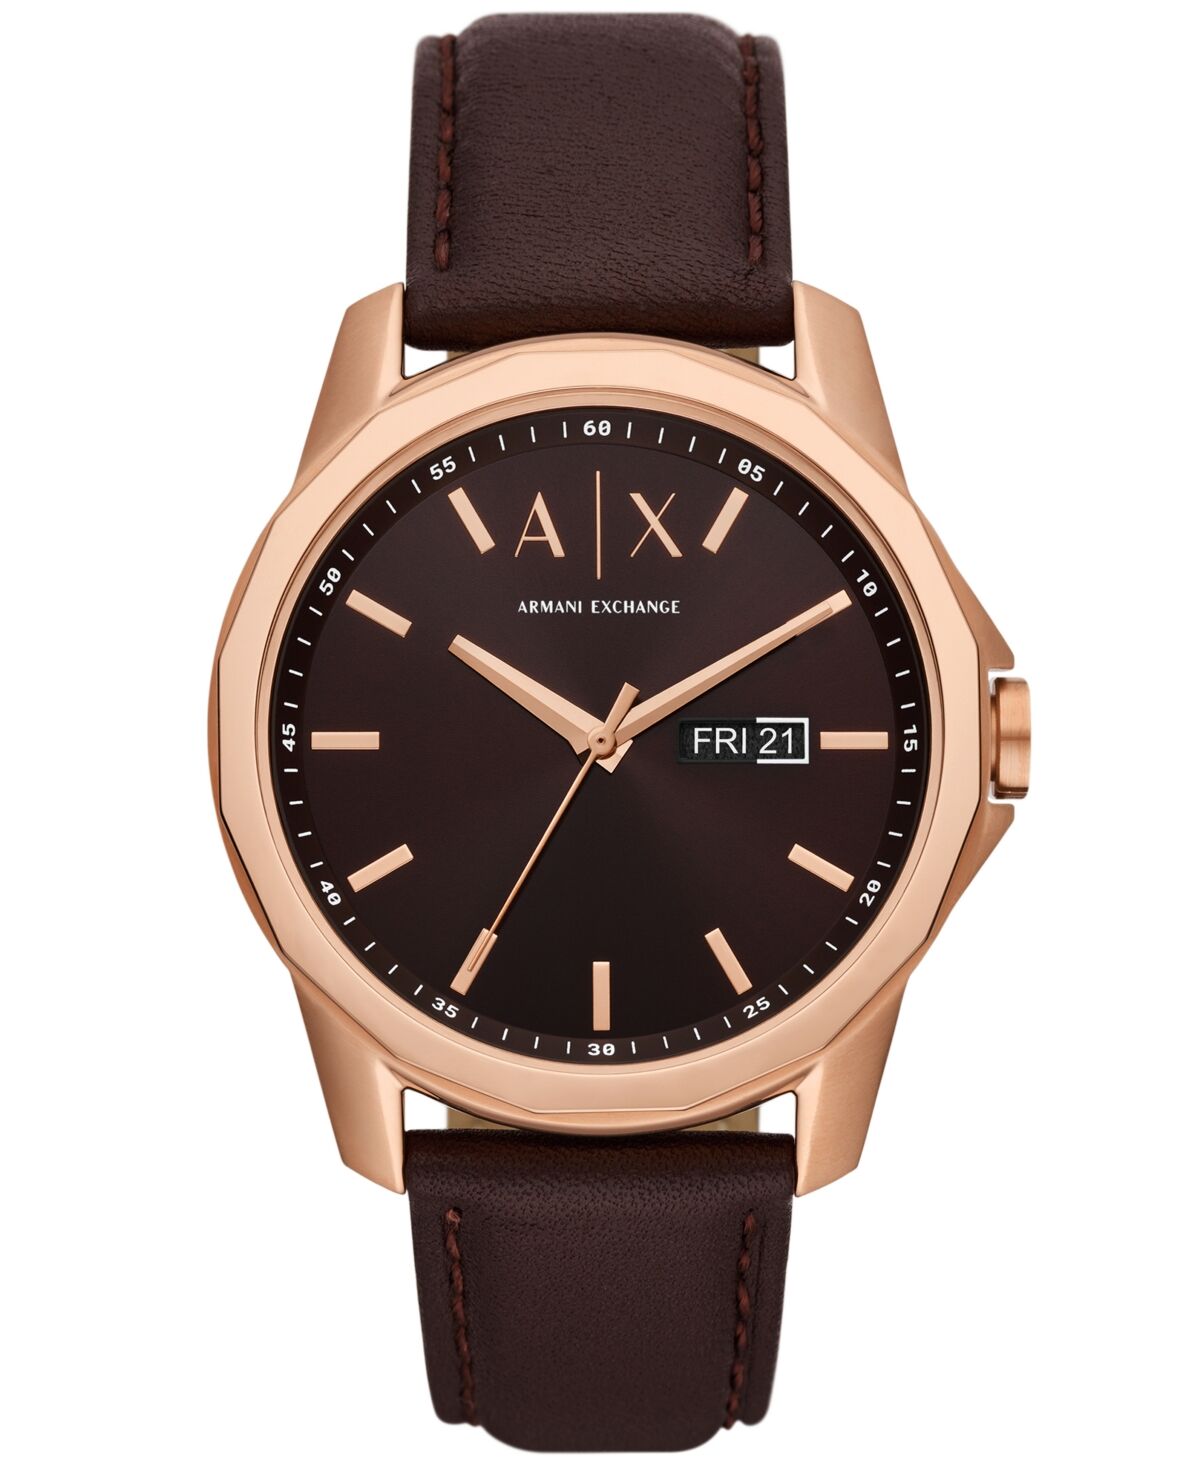 A|x Armani Exchange A X Armani Exchange Men's Three-Hand Day-Date Quartz Brown Leather Watch 44mm - Brown